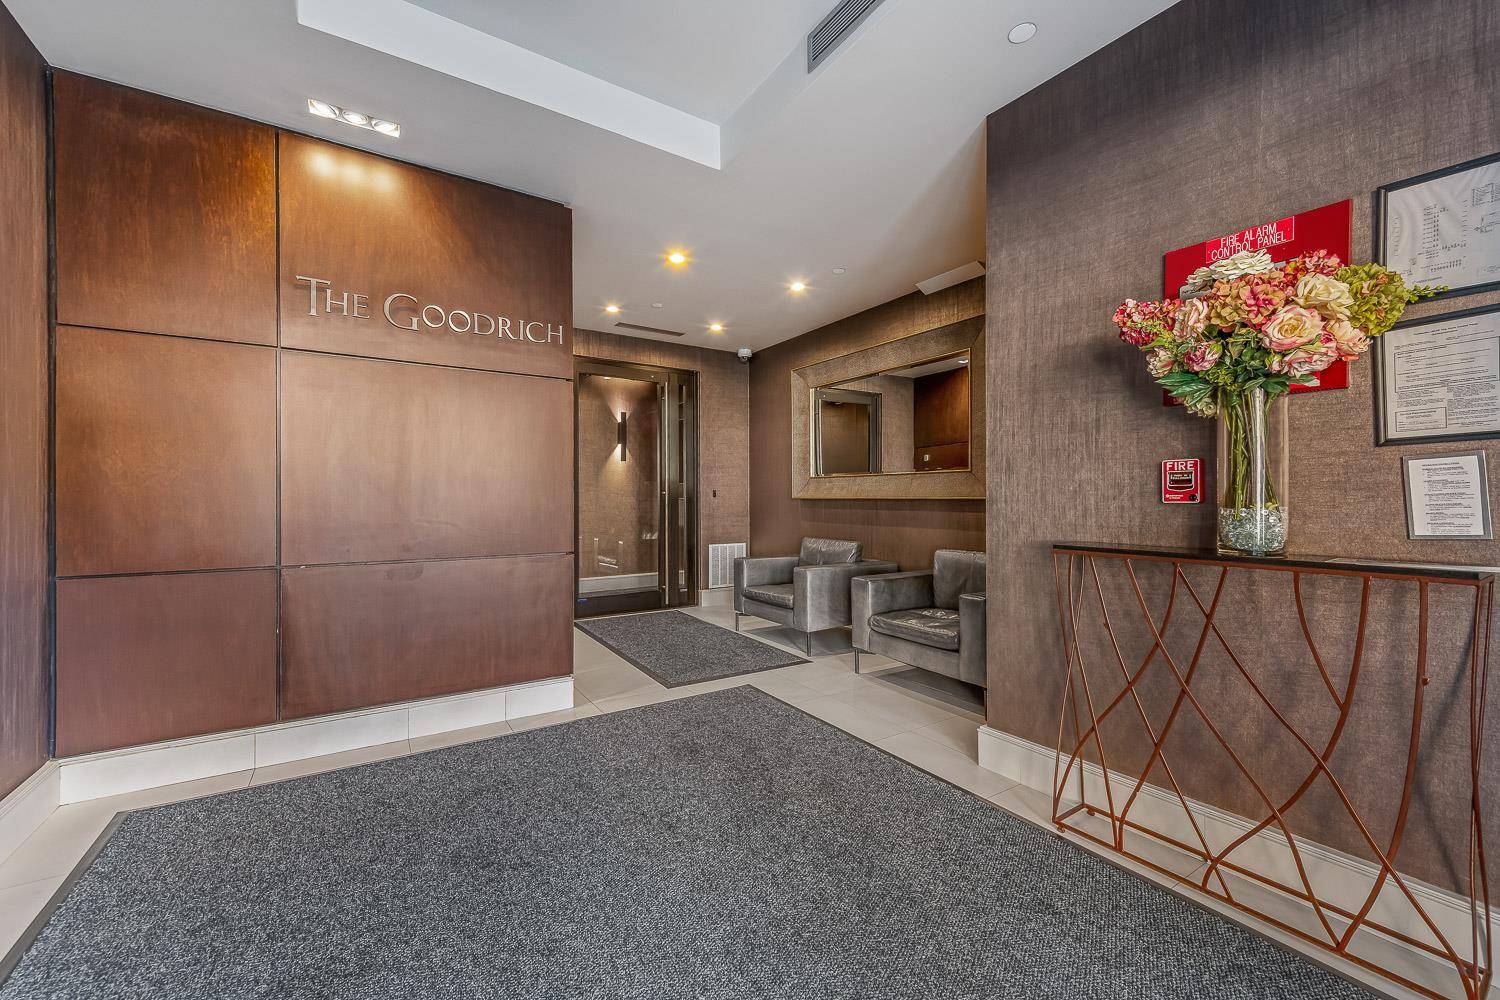 The Goodrich unit 2B where modern luxury living awaits you.